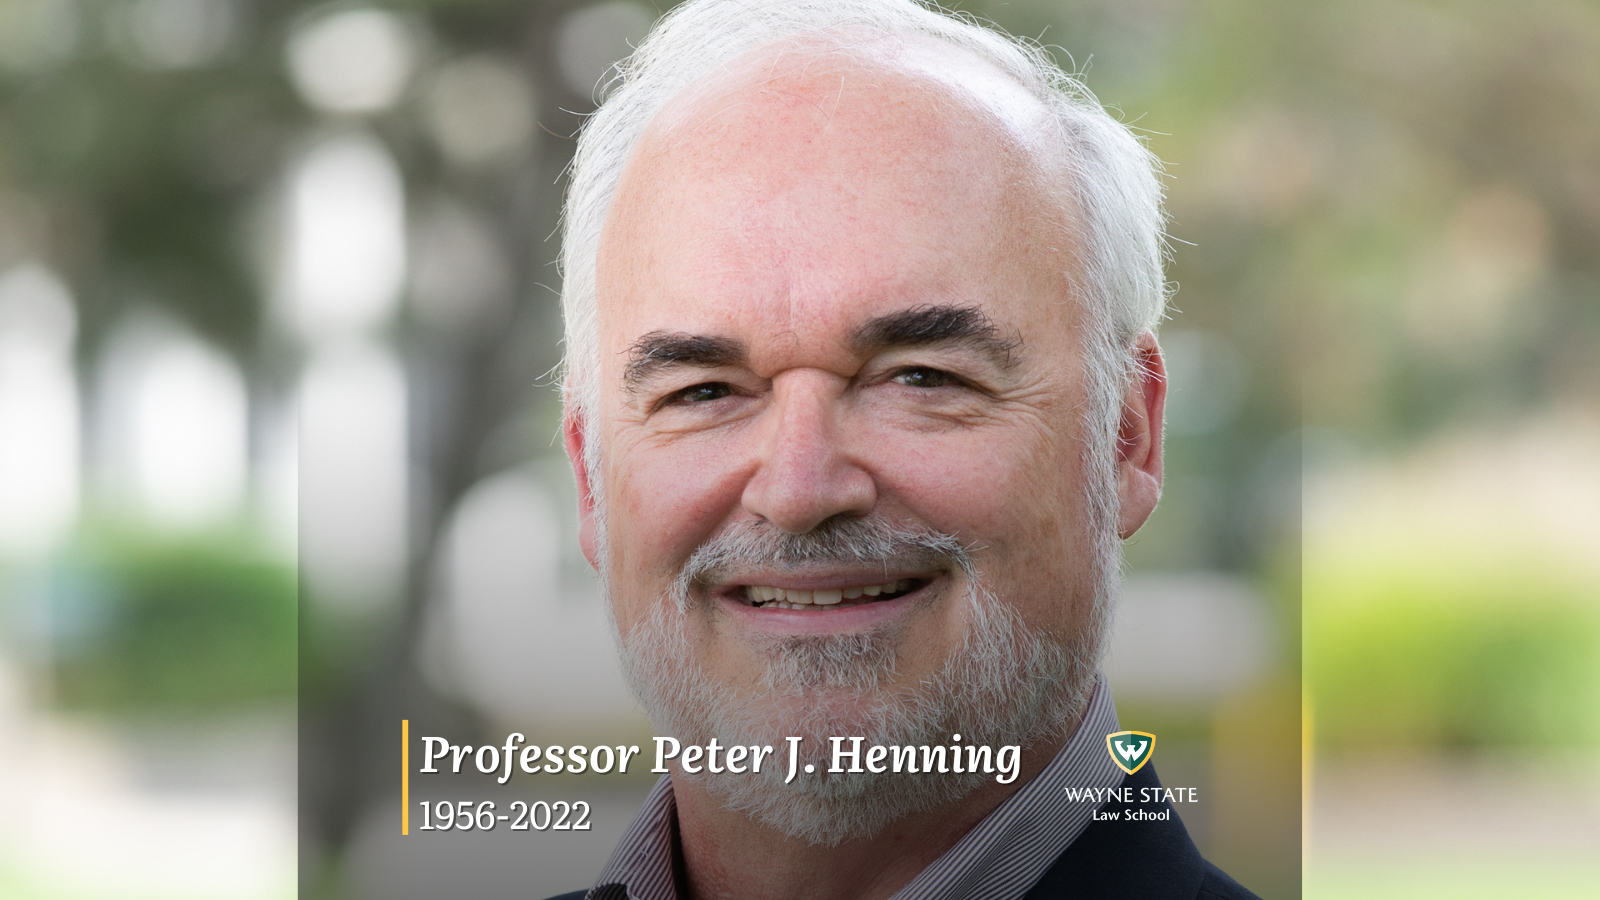 Professor Peter J. Henning